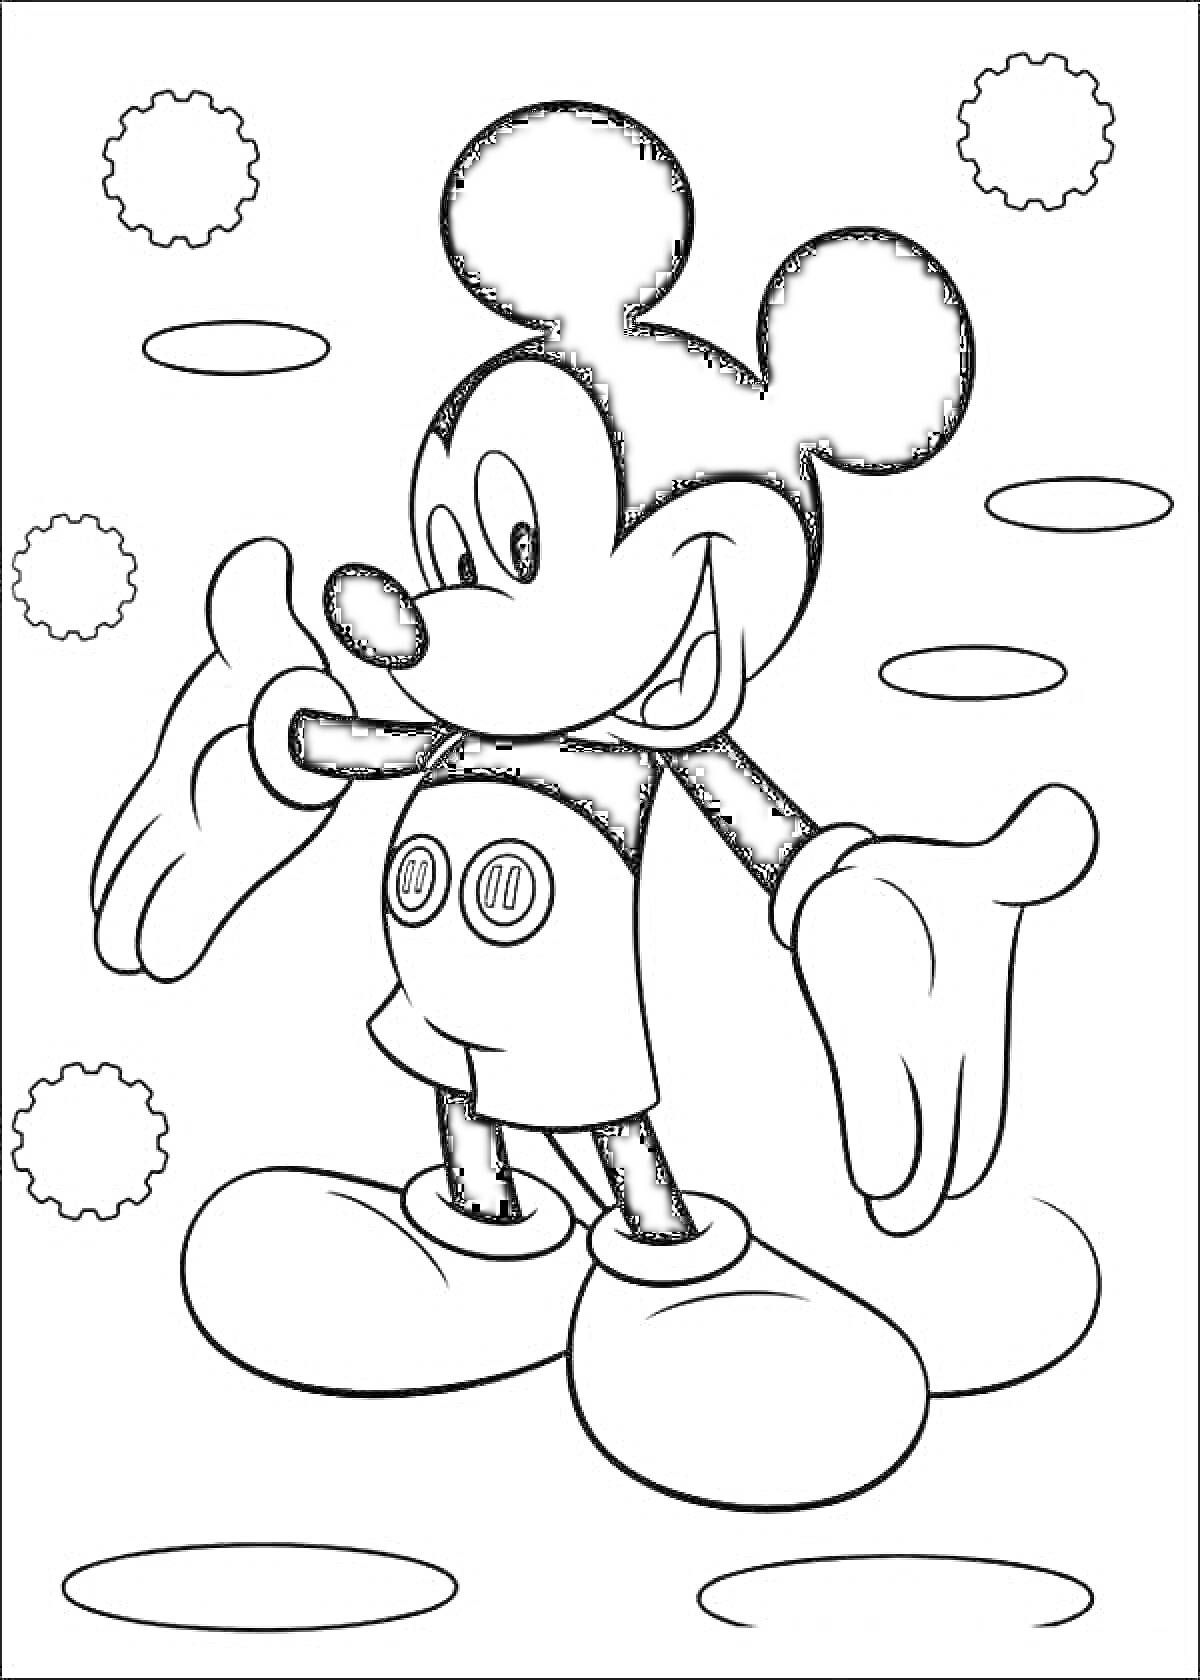 Раскраска Микки Маус с кругами и шестеренками